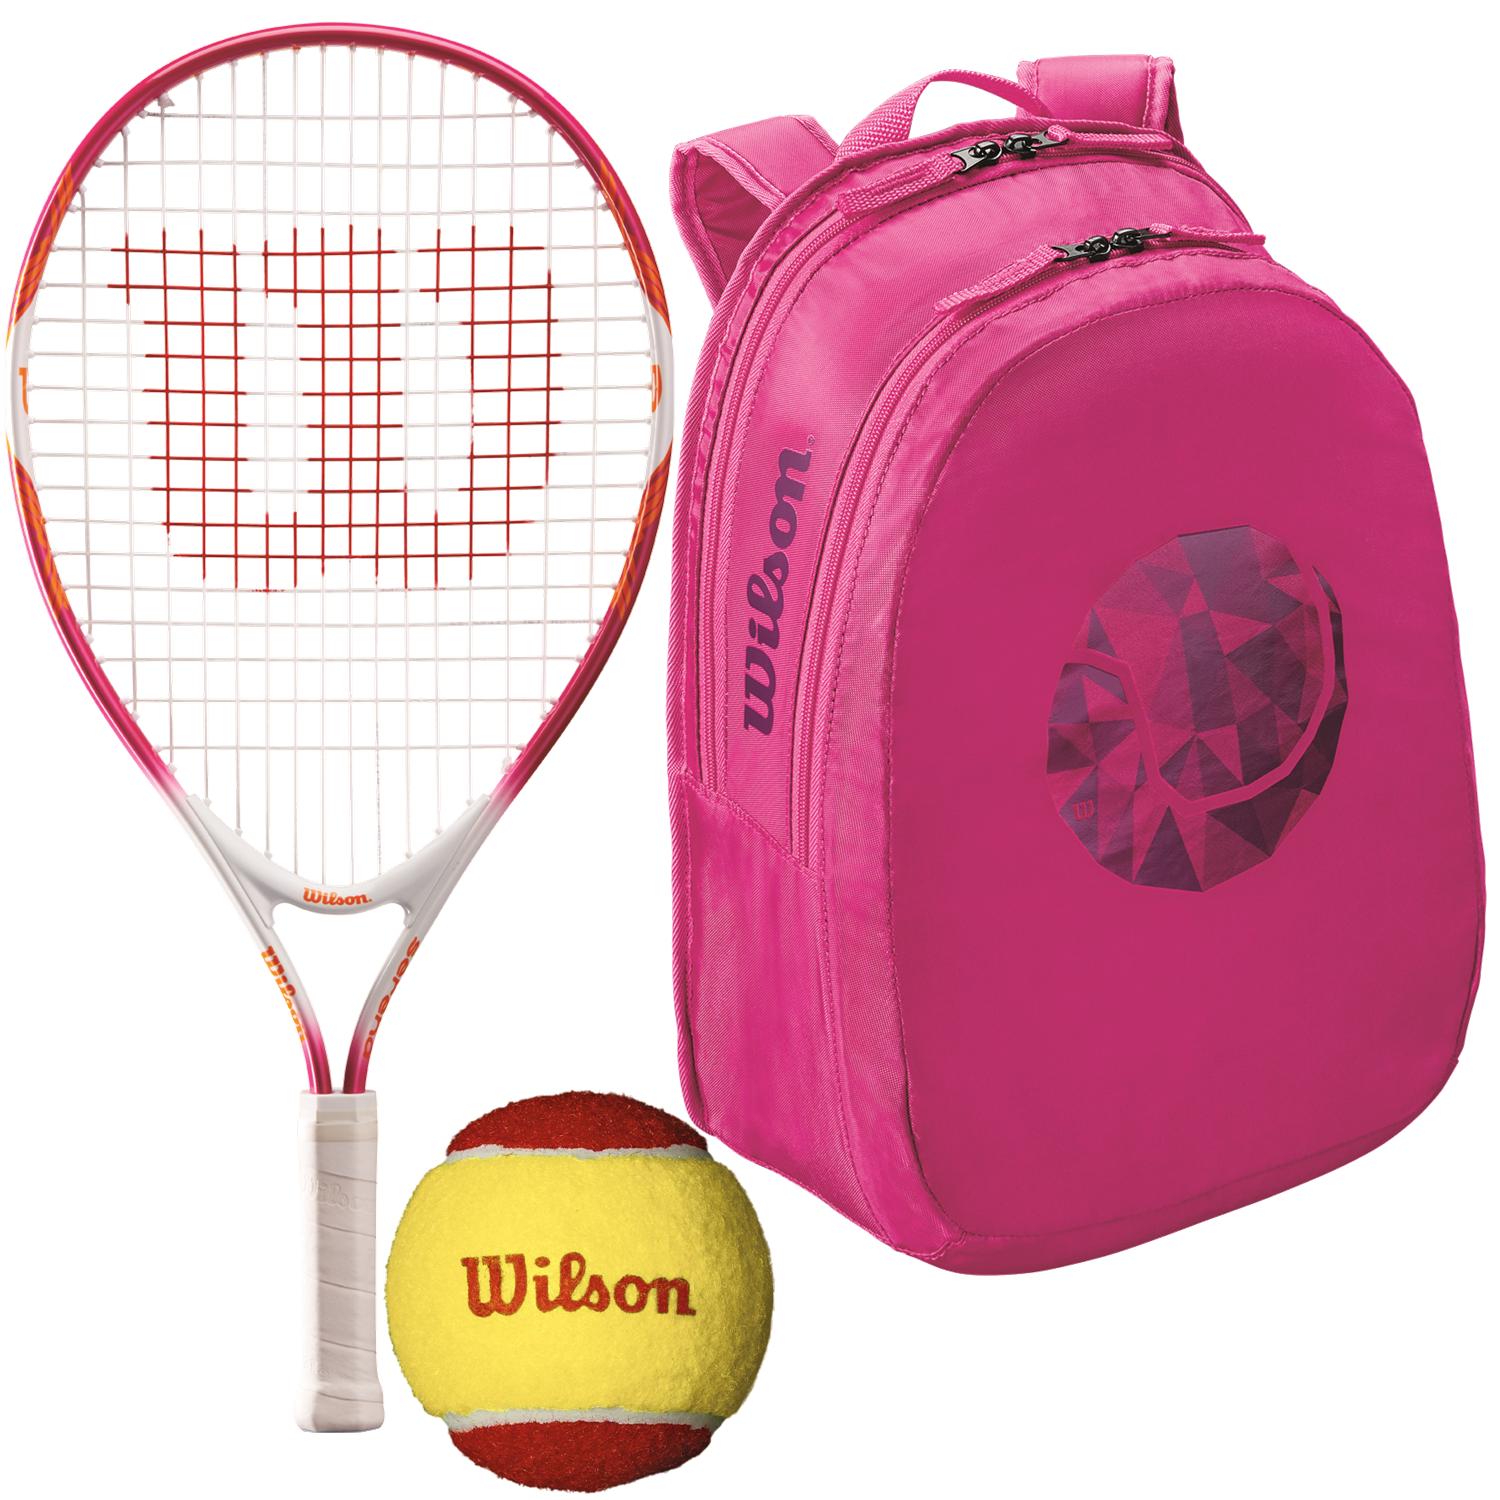 Wilson Serena Williams Junior Tennis Racquet, bundled with a Pink Junior Tennis Backpack and a 3-Pack of Red Felt Starter Tennis Balls